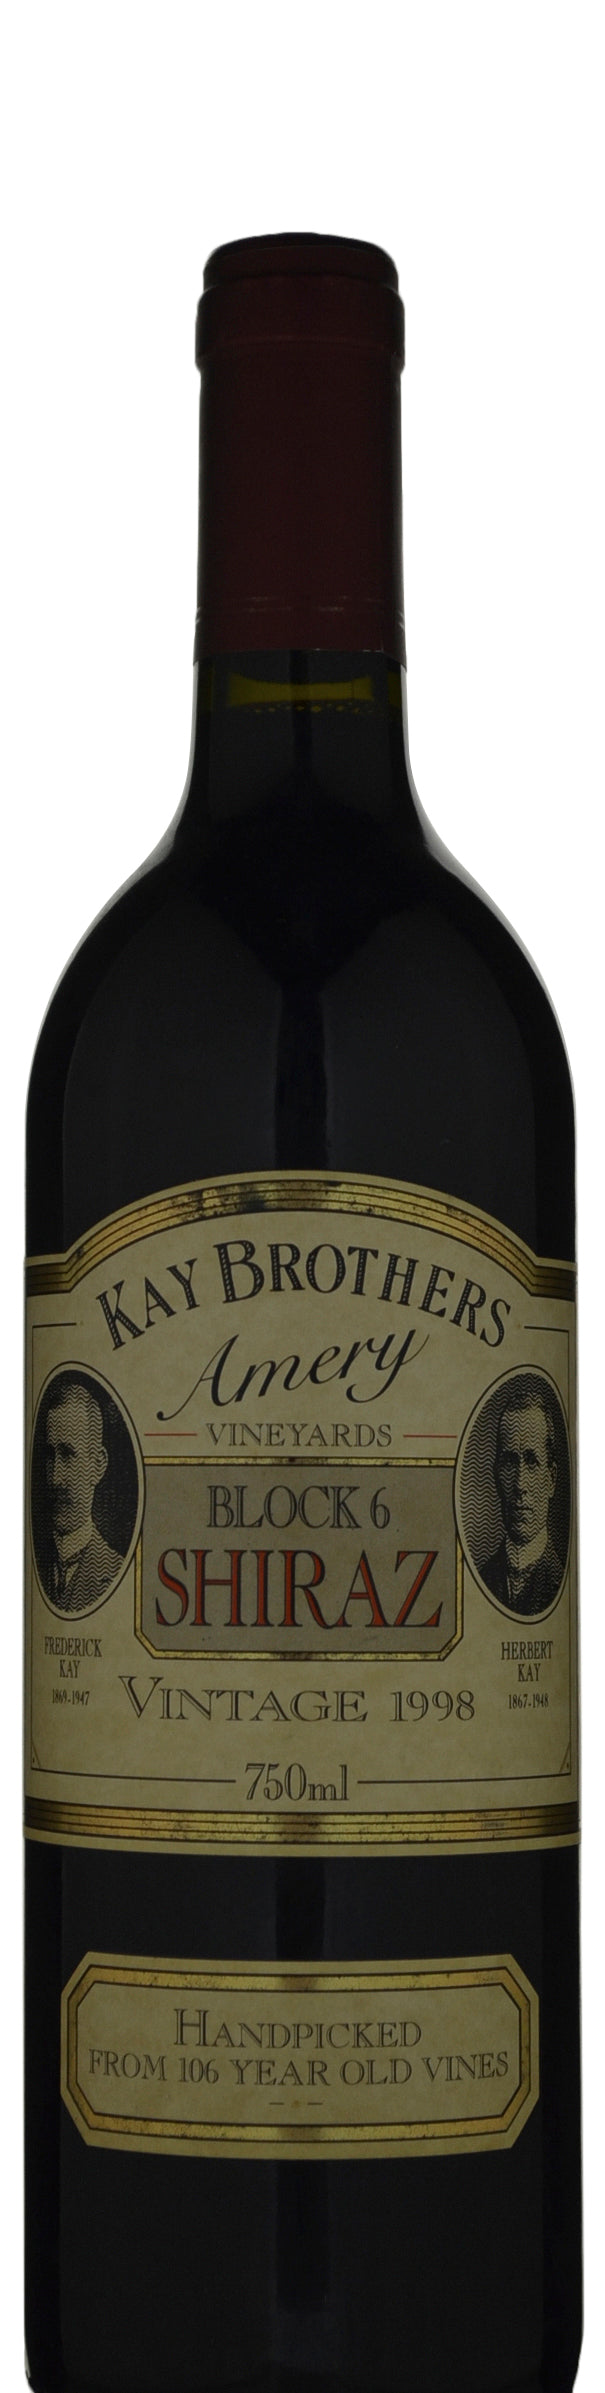 Kay Brothers Amery Vineyards Block 6 Old Vine Shiraz 1998